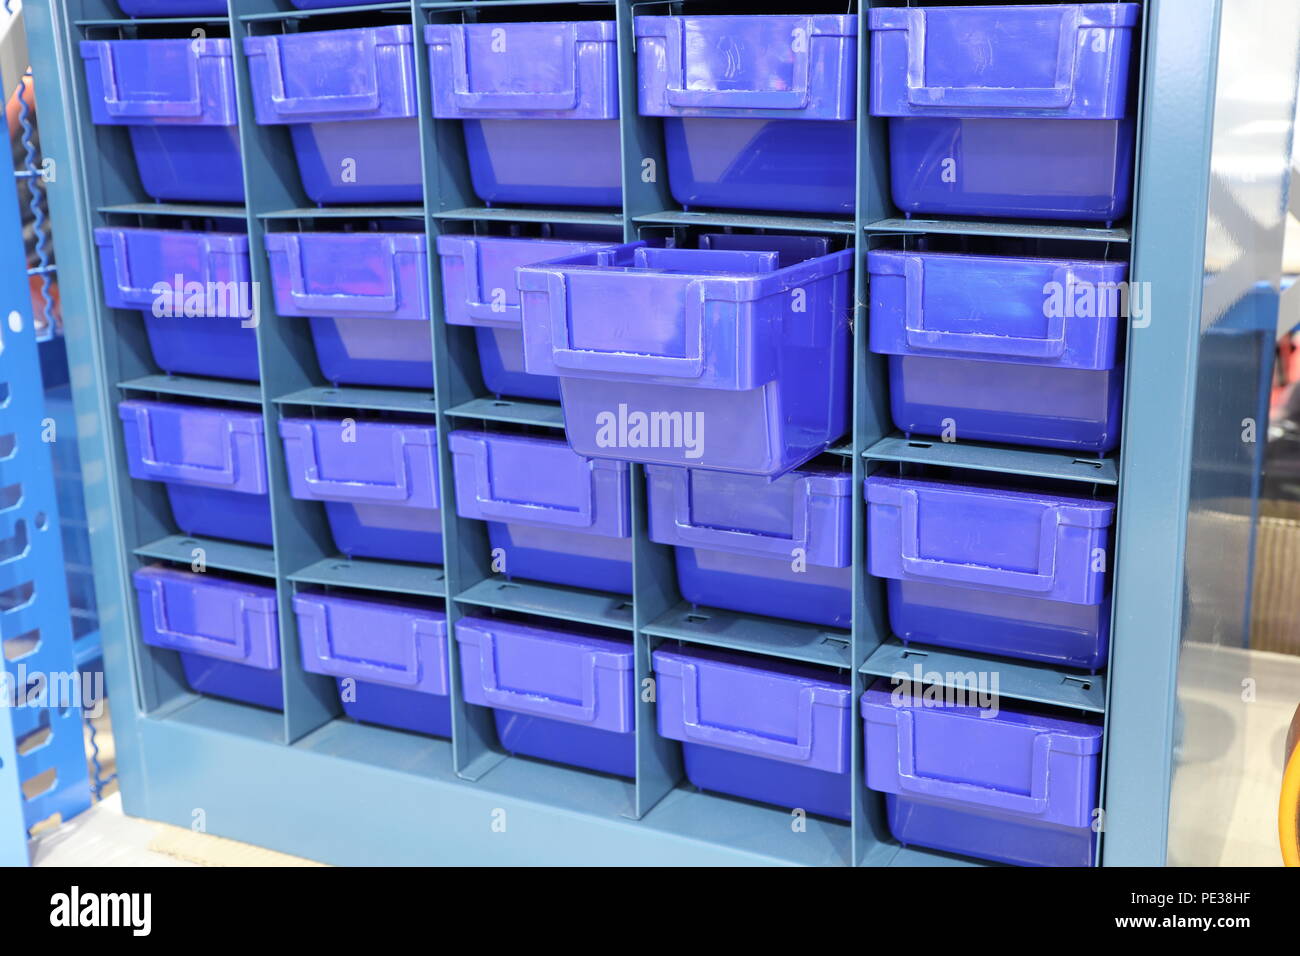 Small Parts Storage Stock Photo - Alamy